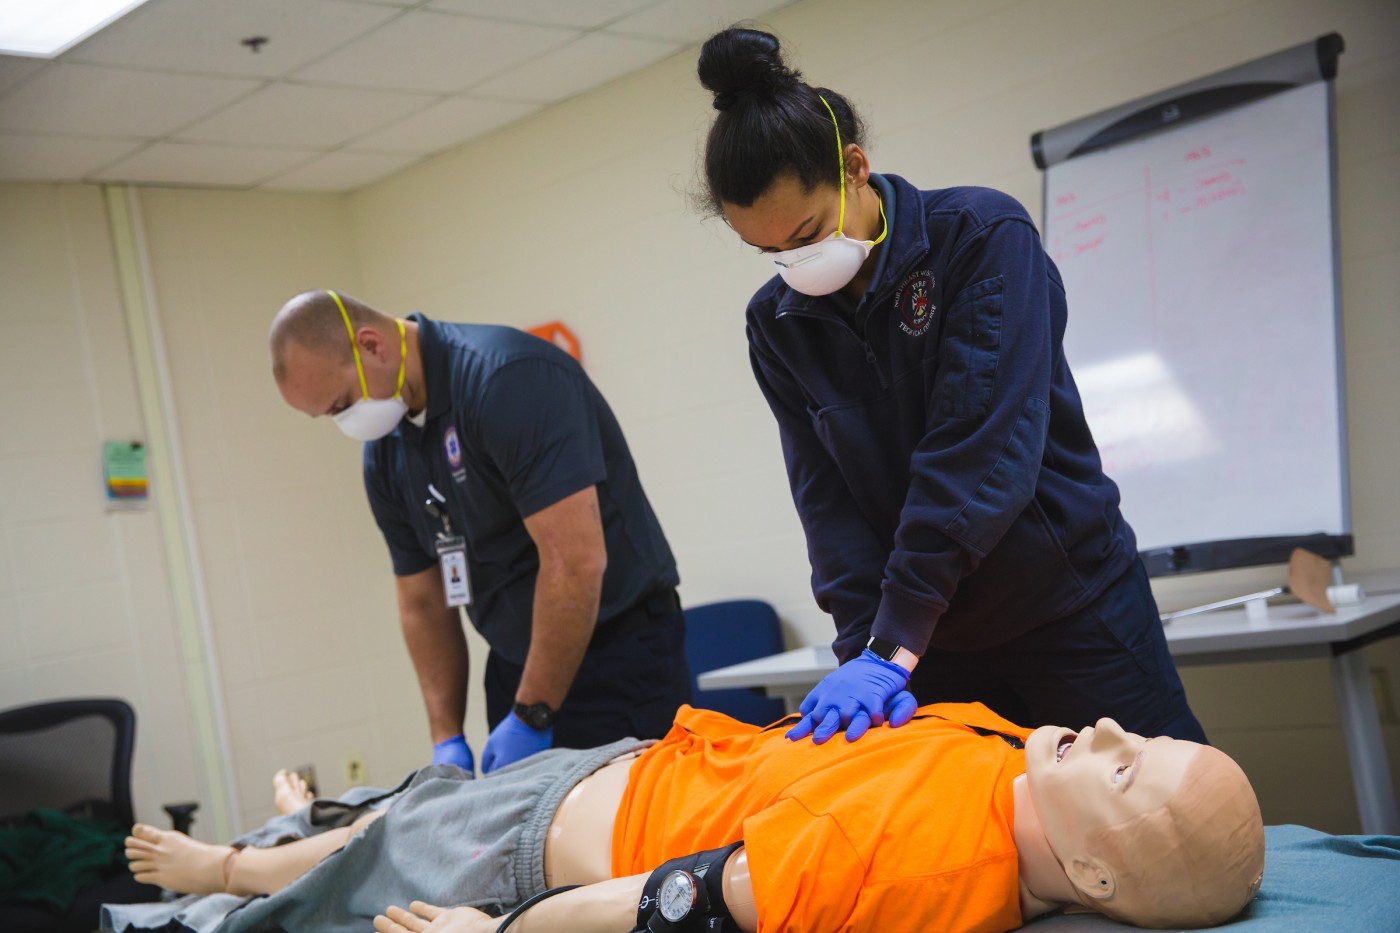 EMT students practicing CPR using proper PPE